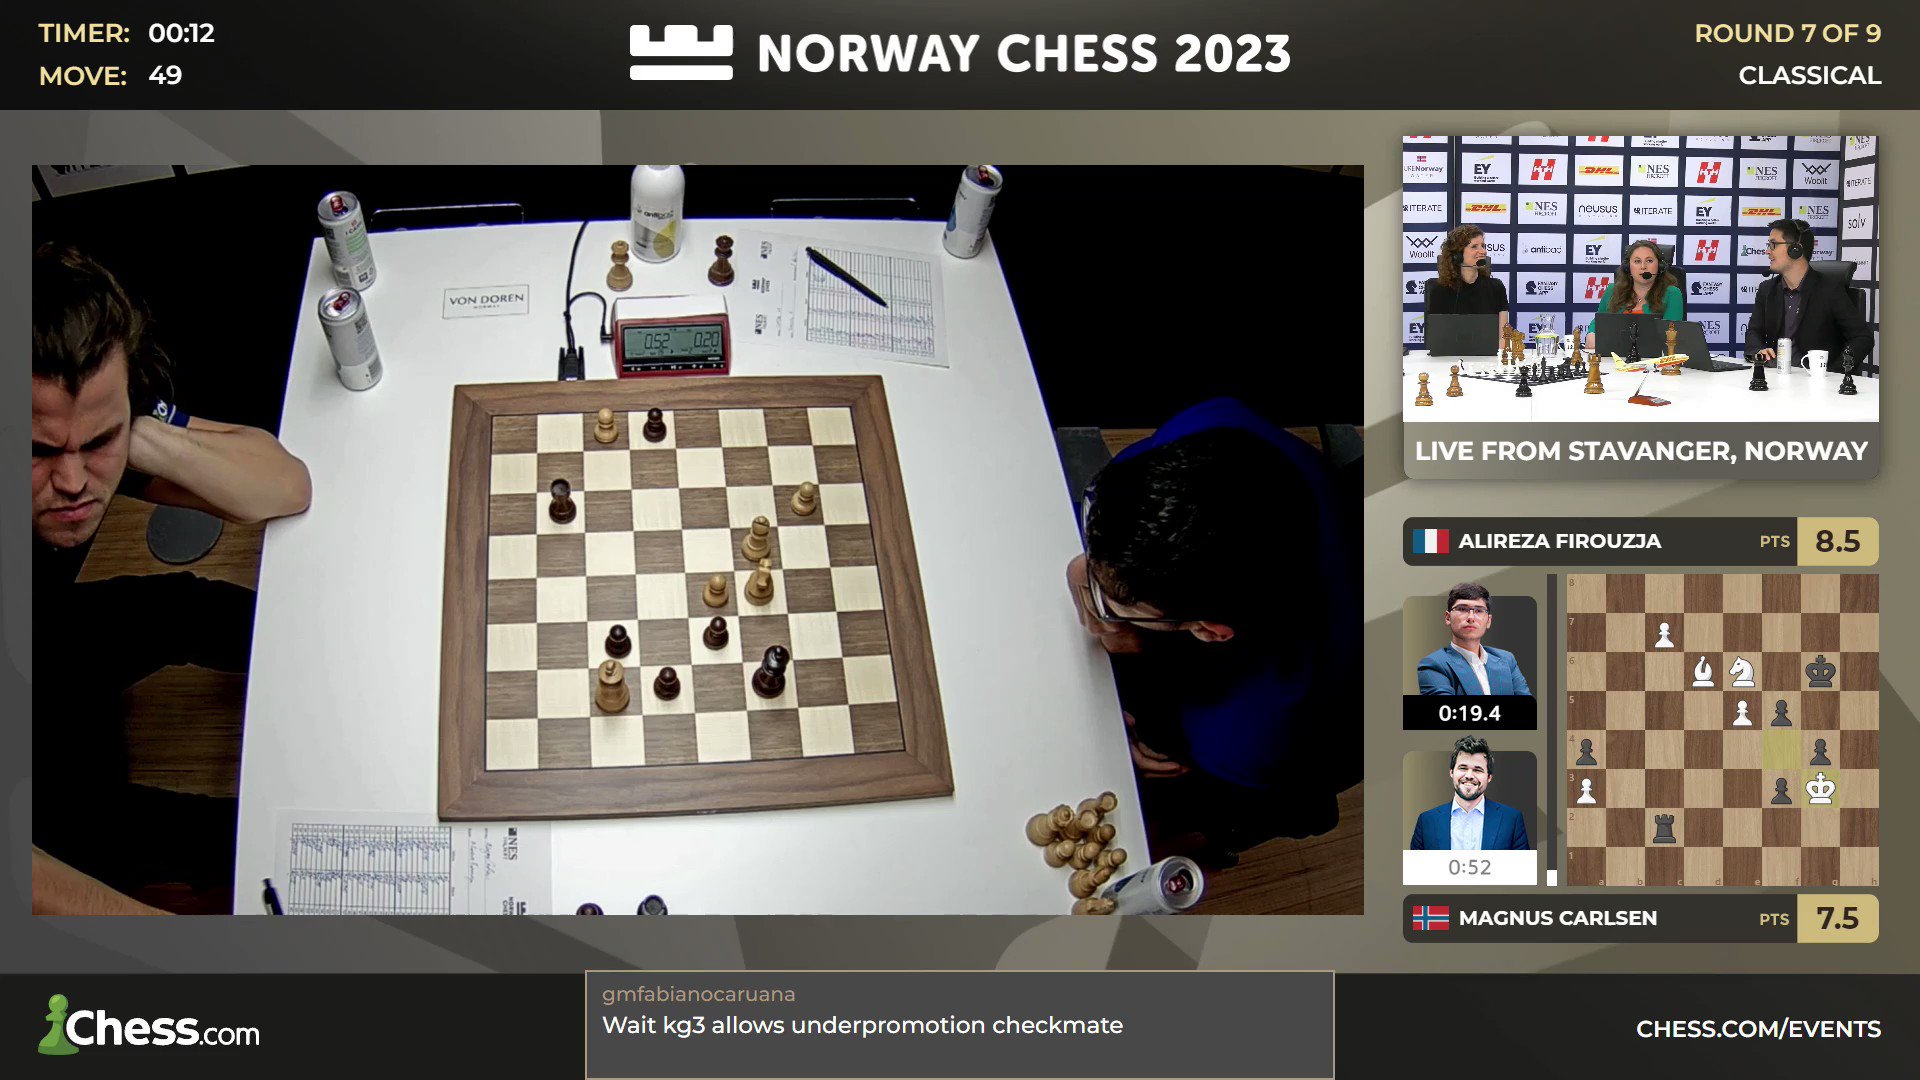 Alireza Firouzja: I was very close to win the whole thing!, Norway Chess